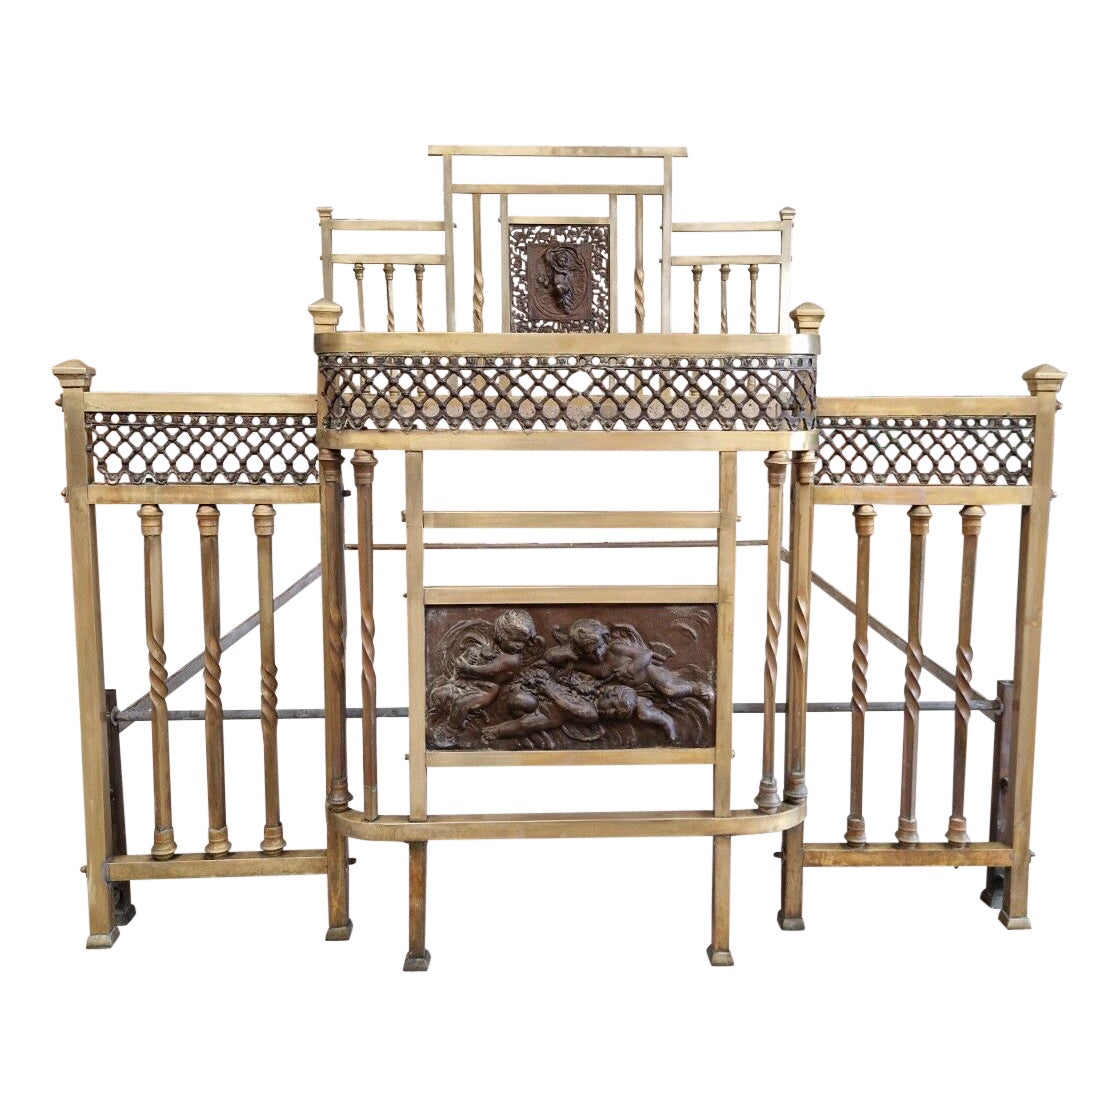 Antique Italian Brass Bed Art Nouveau Period 